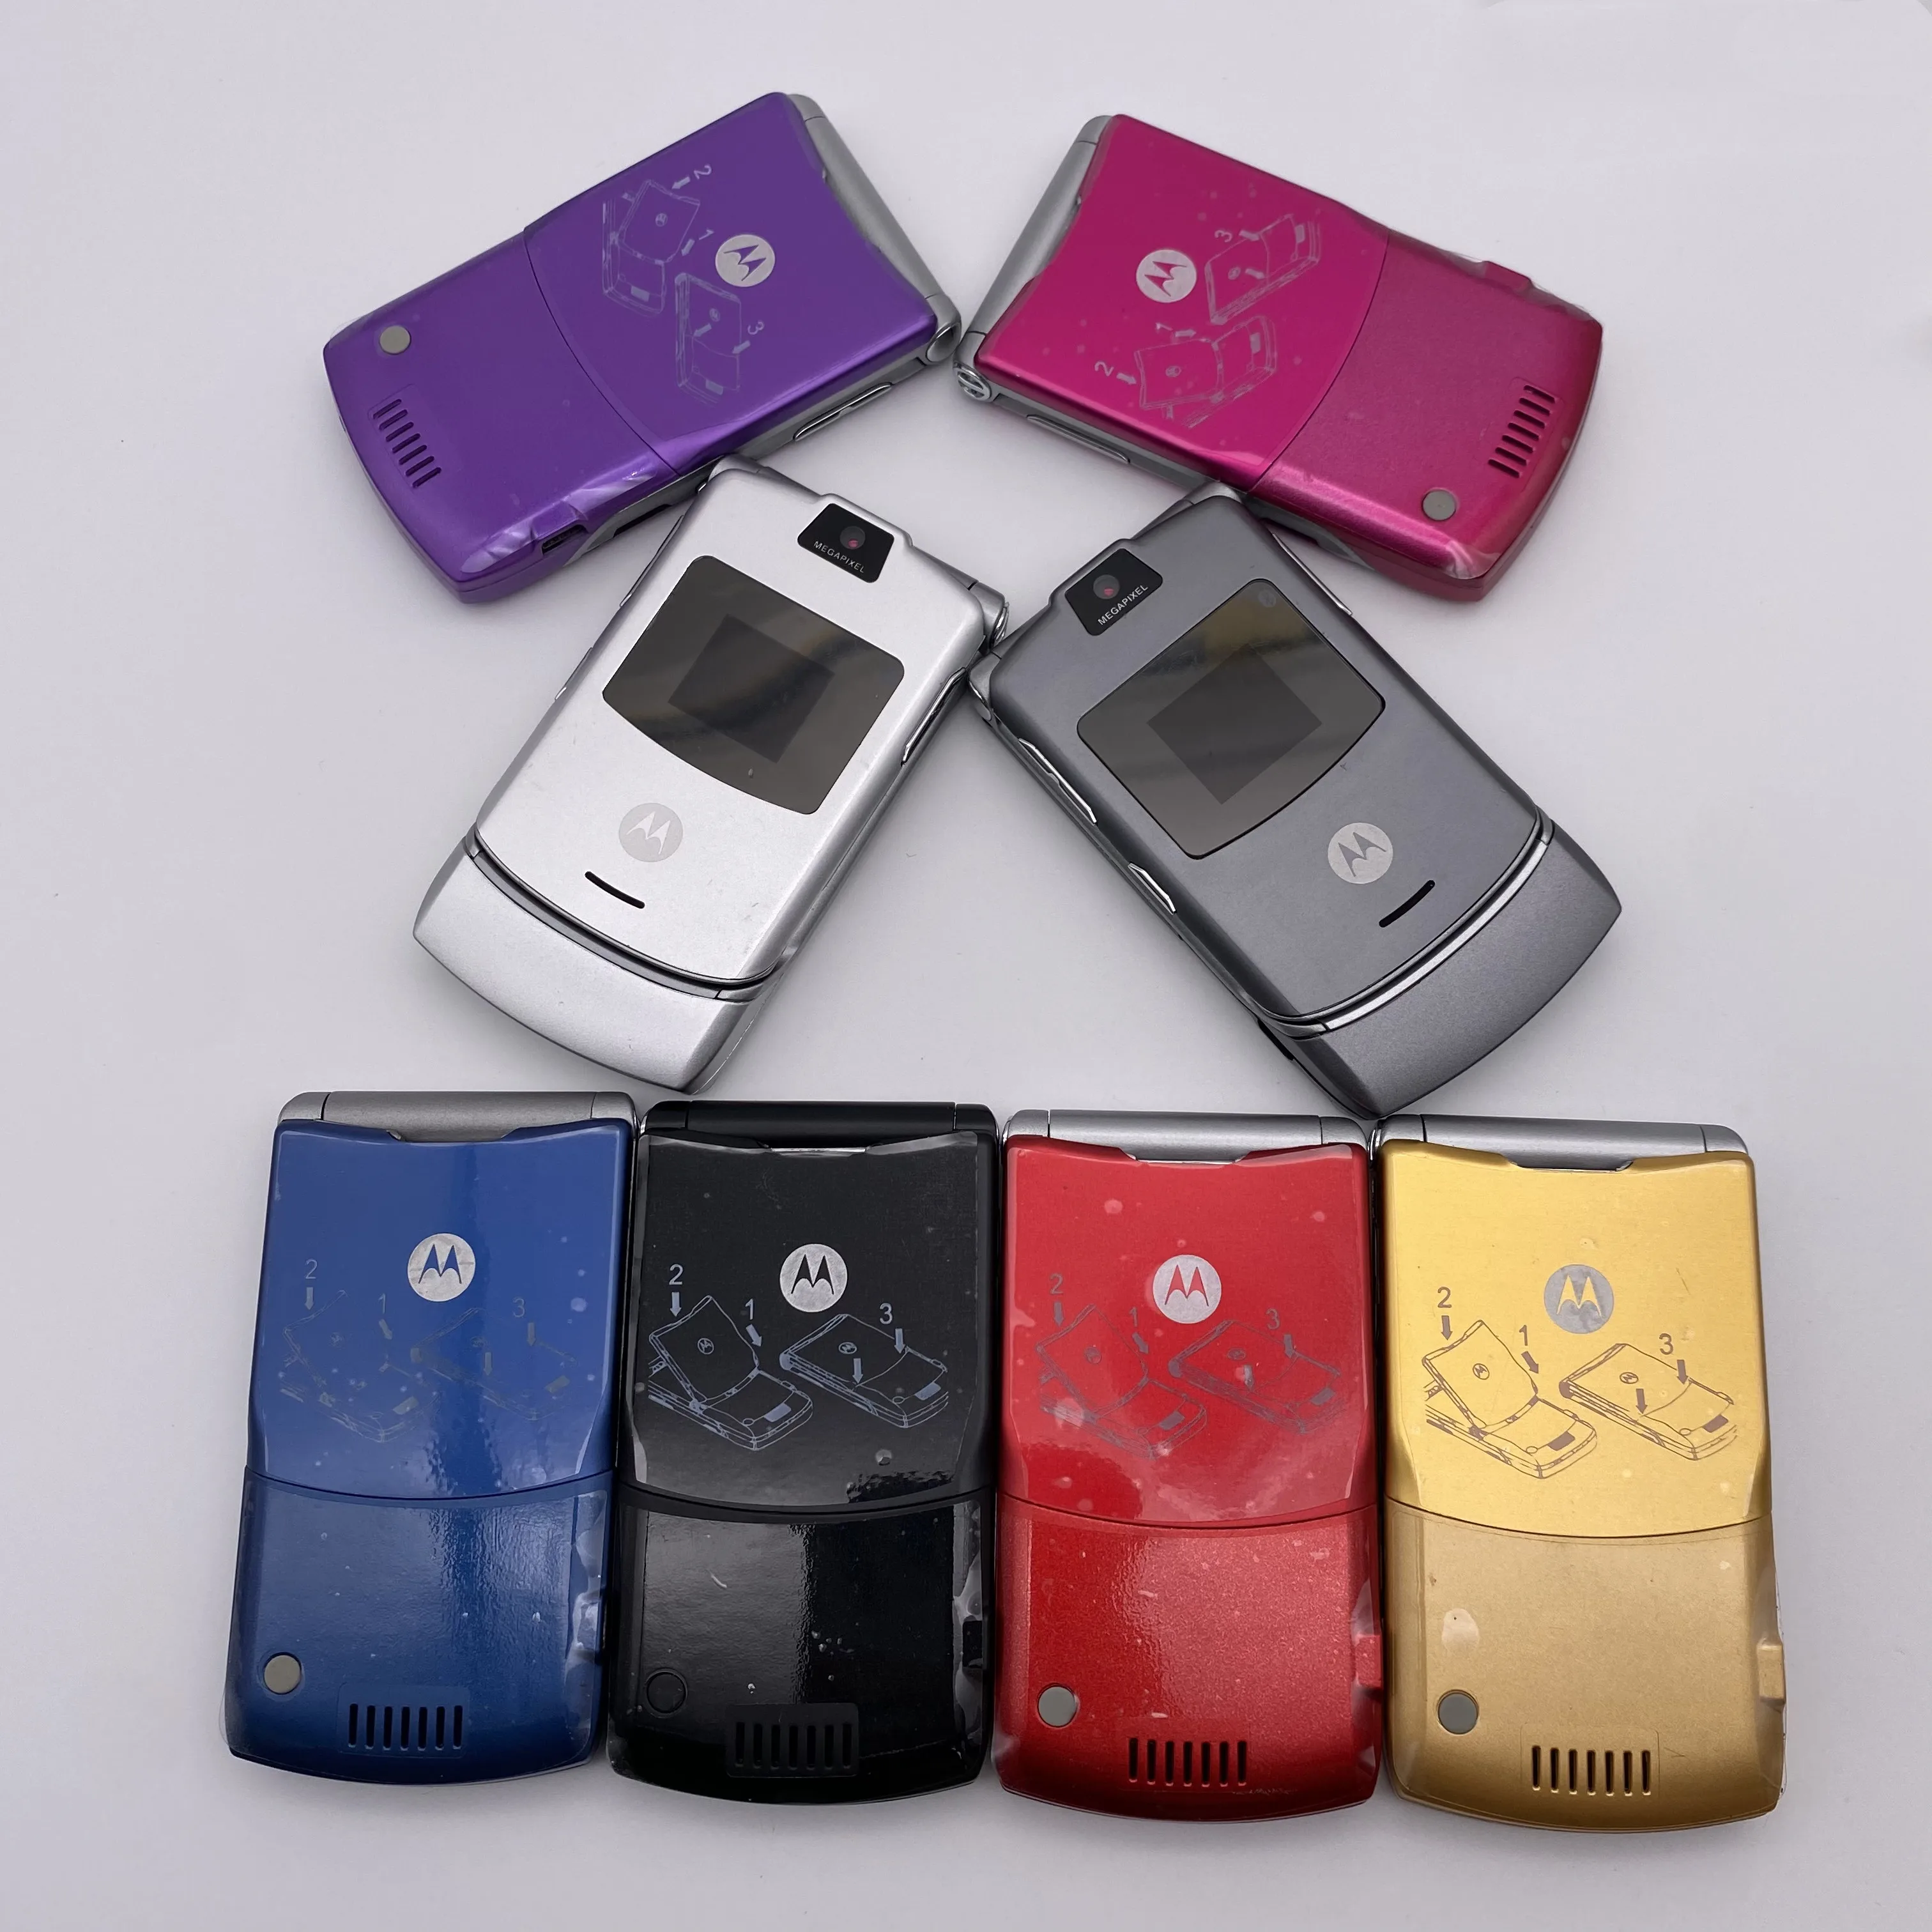 Motorola RAZR V3 Flip Mobile Phone Unlocked Camera Cellphone 2G GSM  Bluetooth